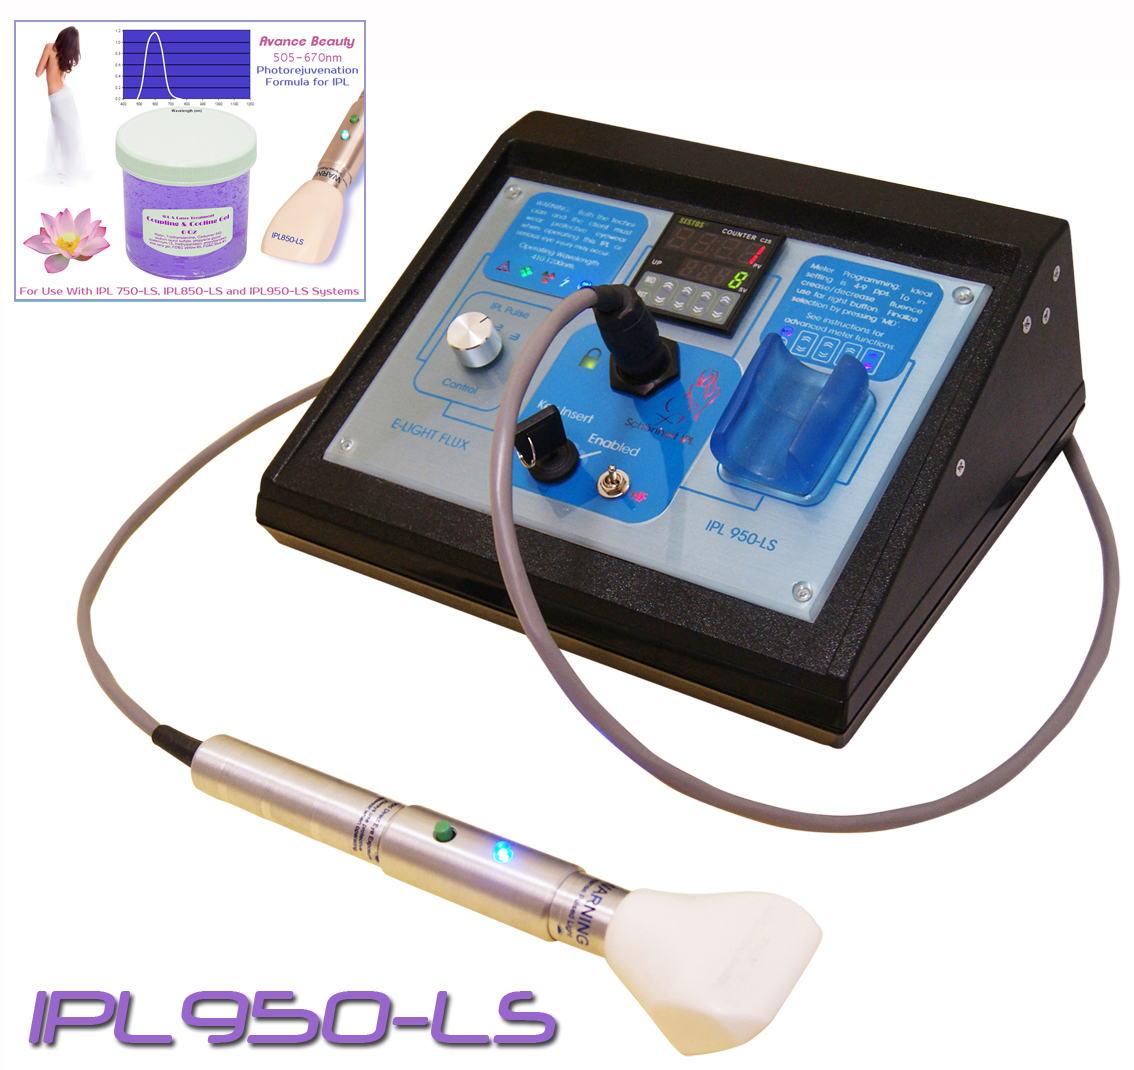 IPL950-LS Photorejuvenation Kit 505-670nm with Beauty Treatment Machine, System, Device.  642057128599